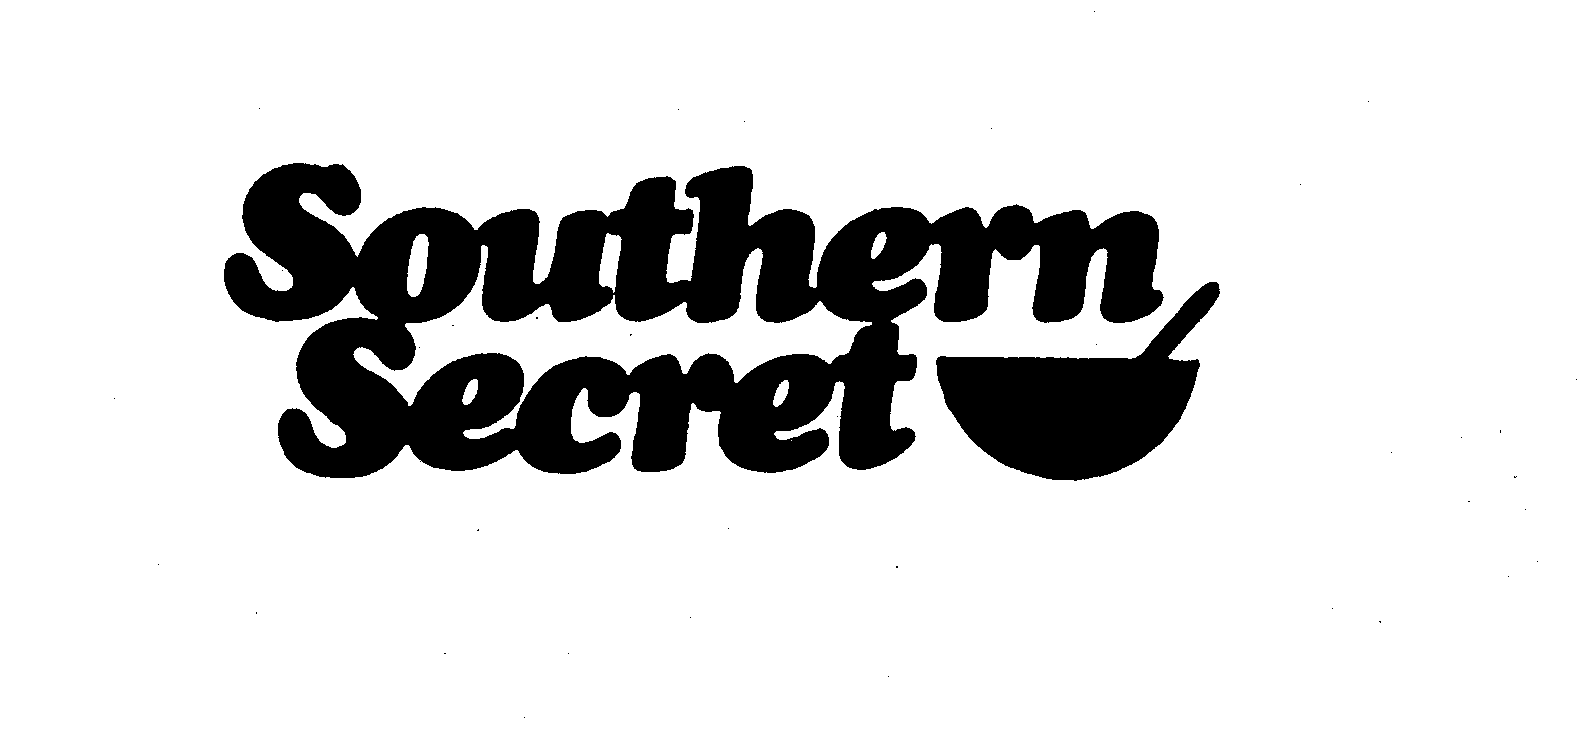  SOUTHERN SECRET